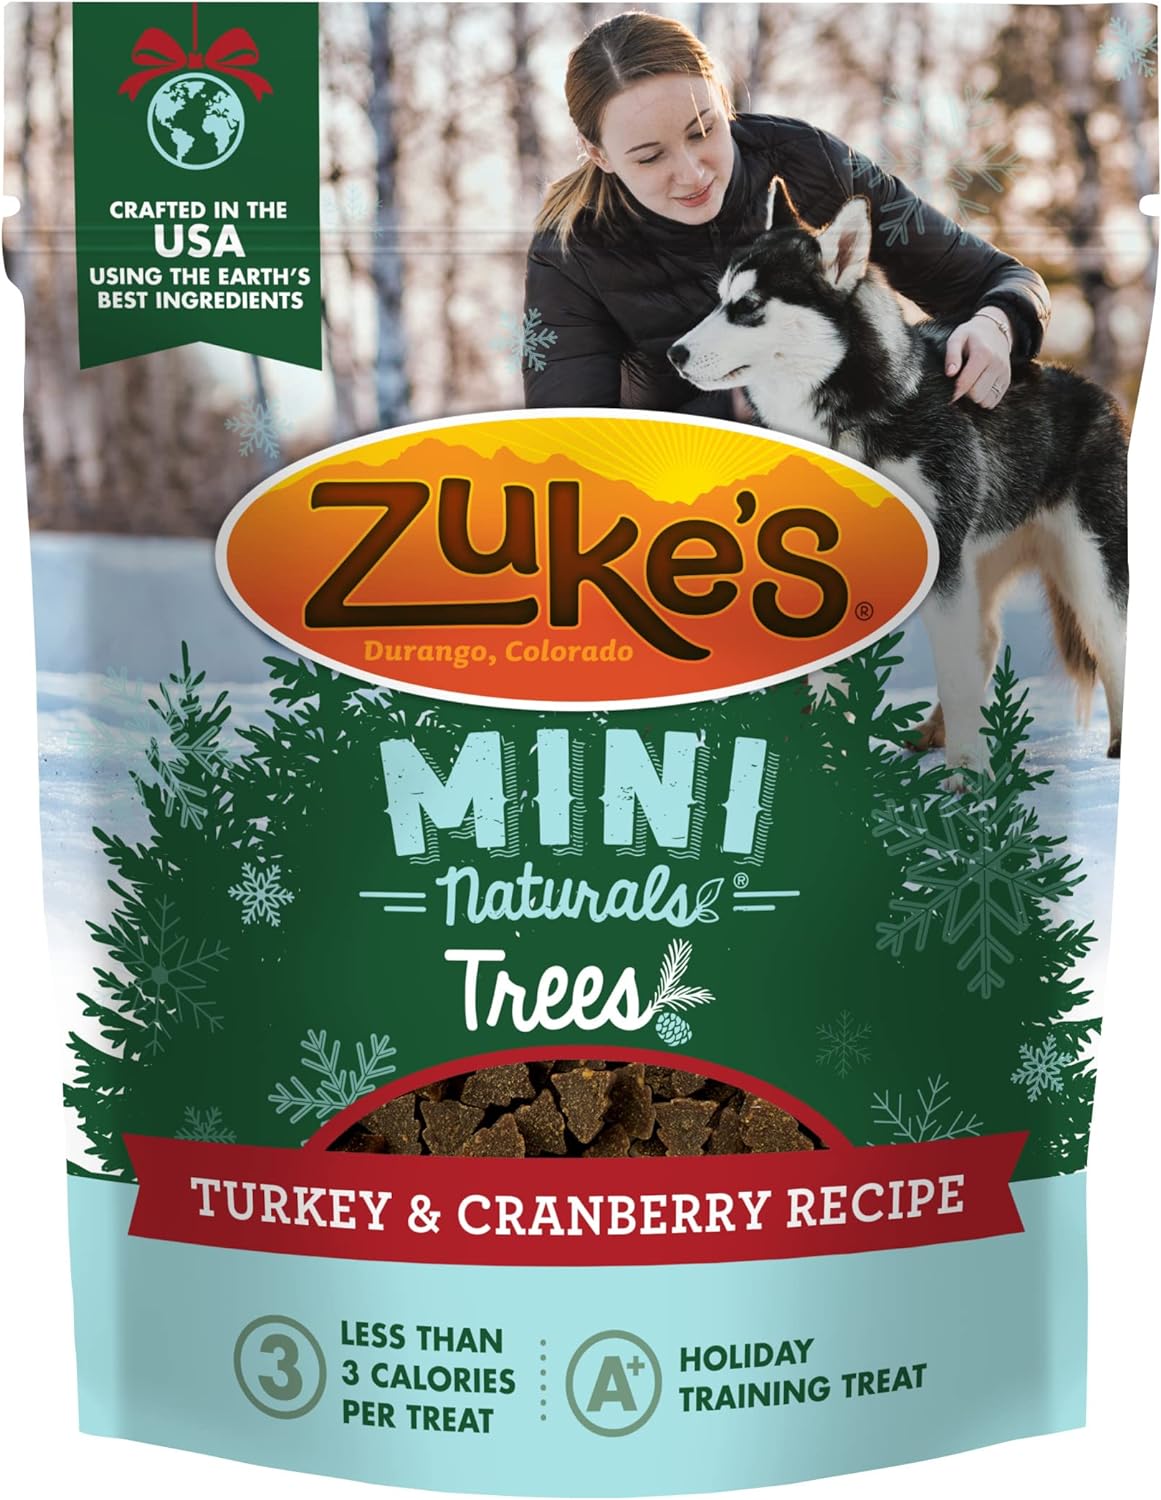 Zuke's Mini Natural Holiday Trees Turkey & Cranberry